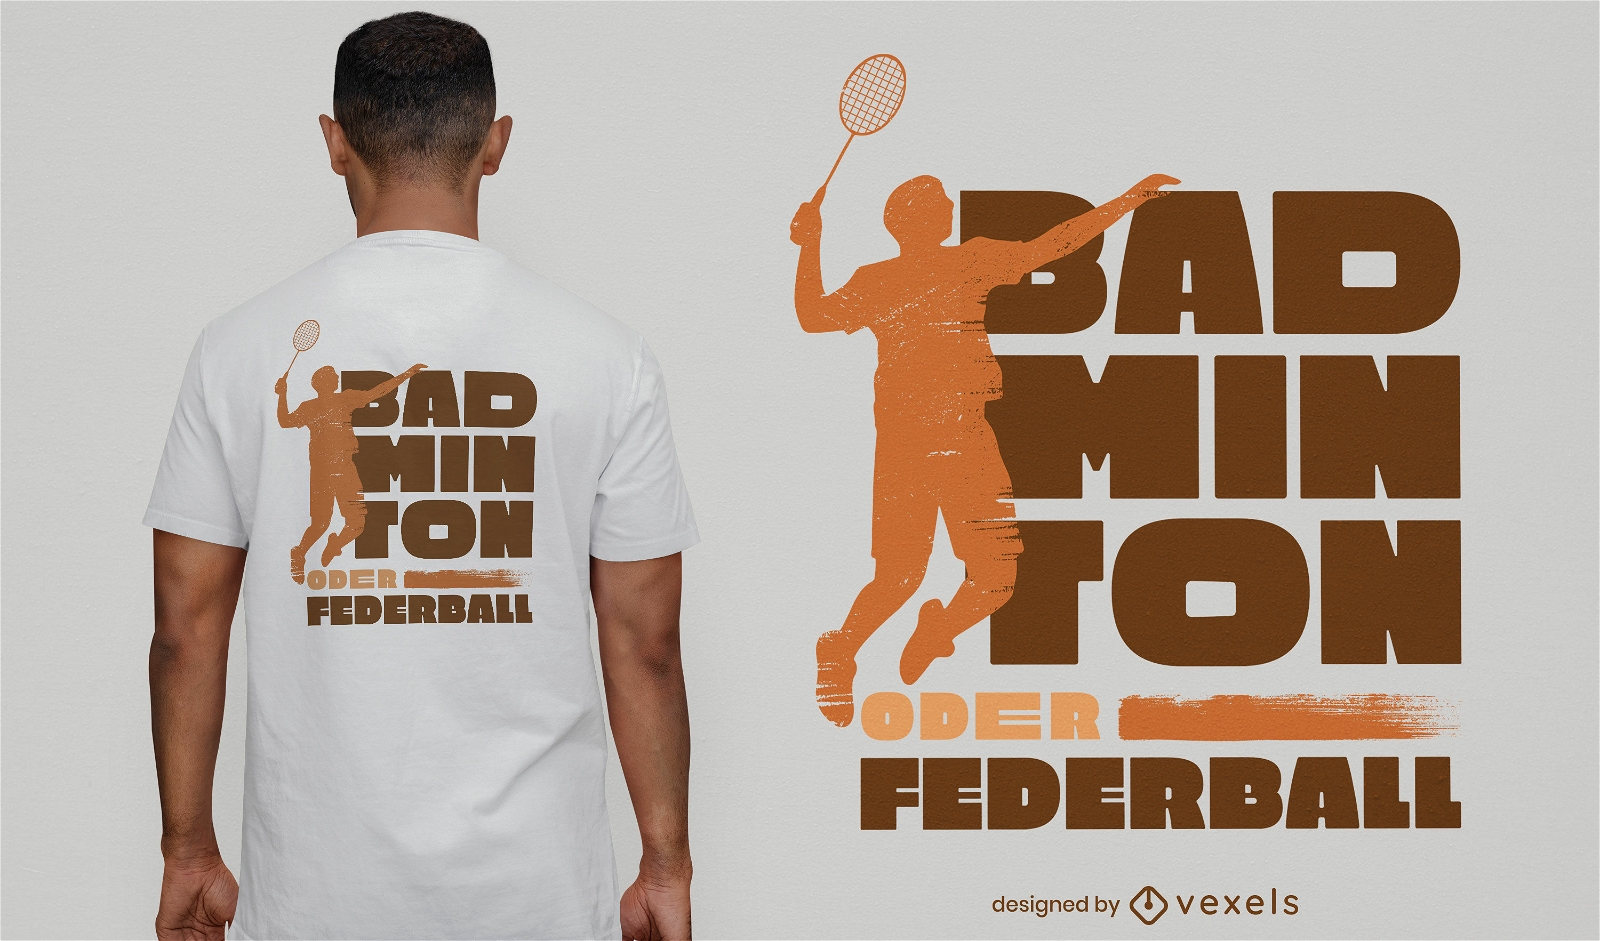 Diseño de camiseta de silueta de jugador deportivo de bádminton